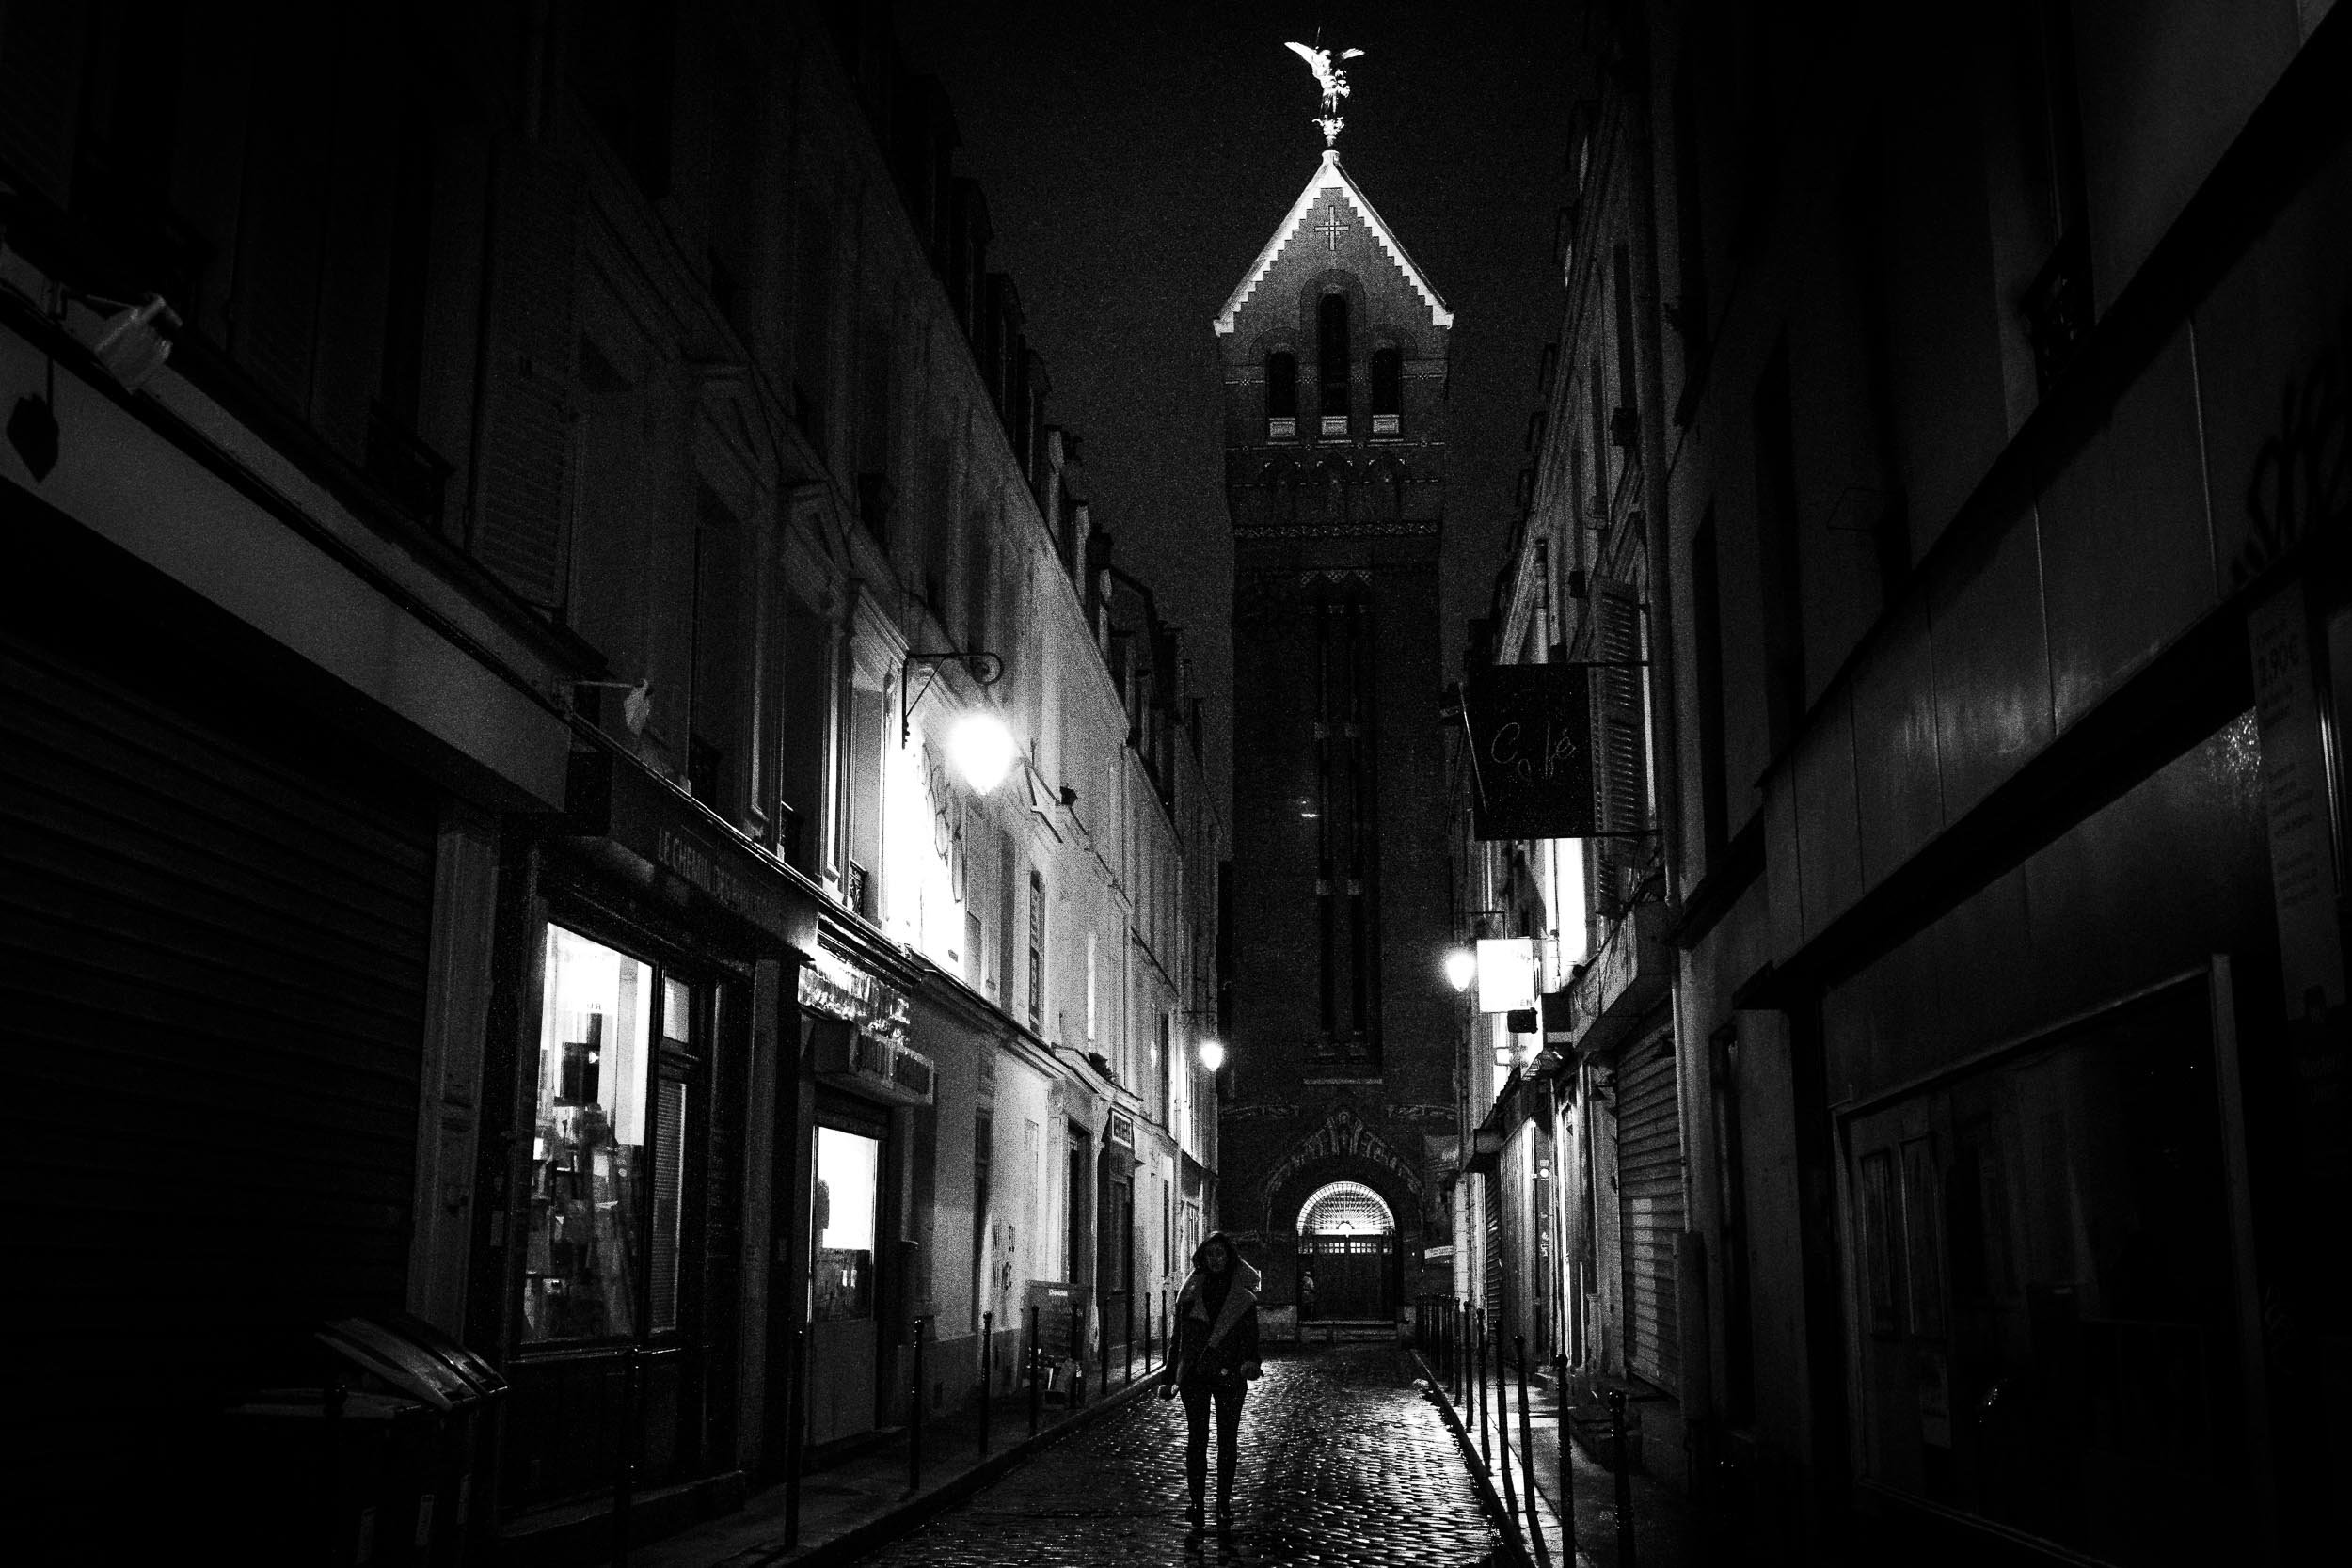 047-street-in-paris-evening.jpg